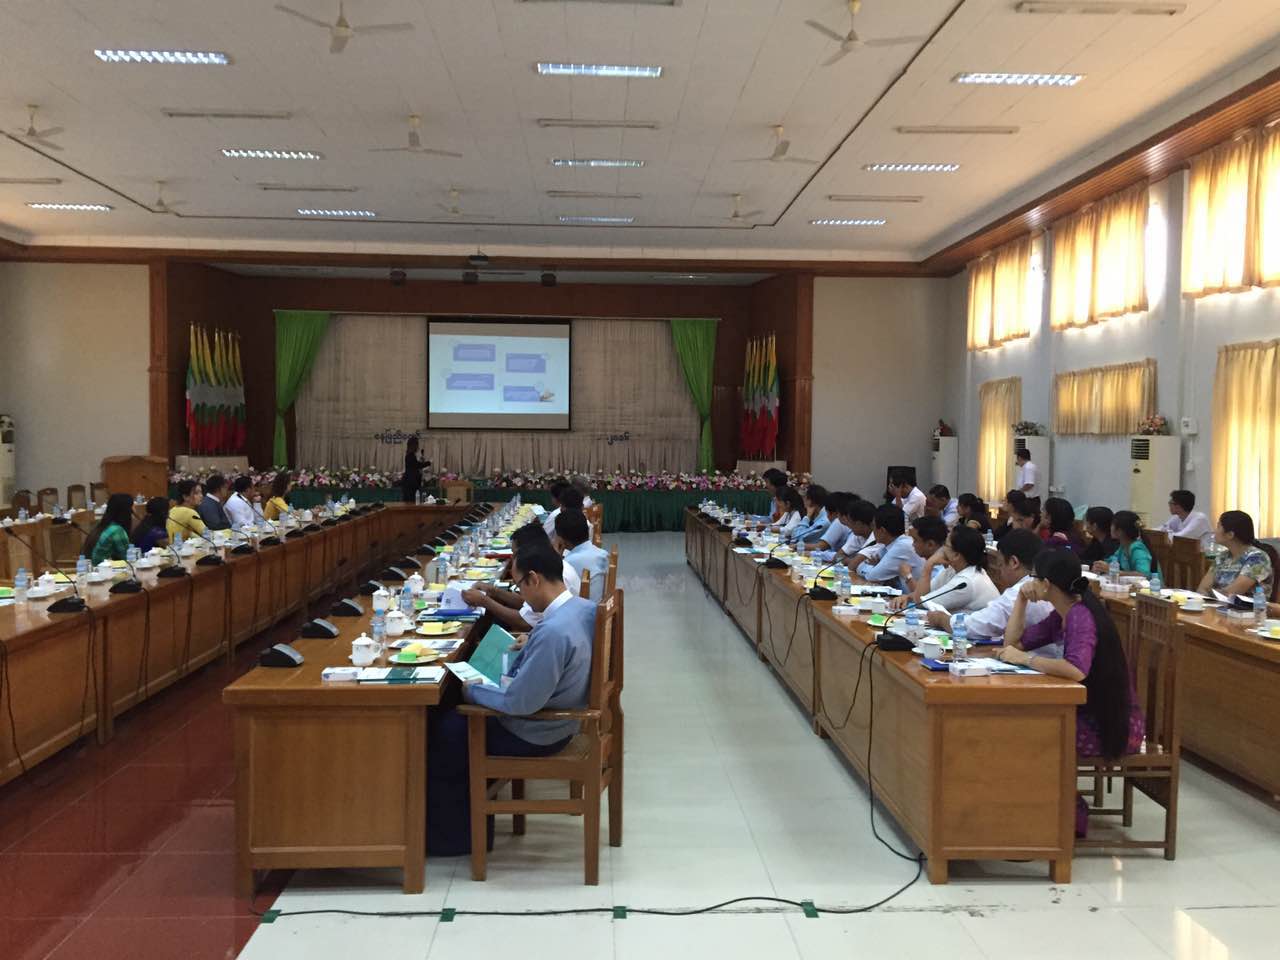 BONLE team make presentation at Myanmar Power